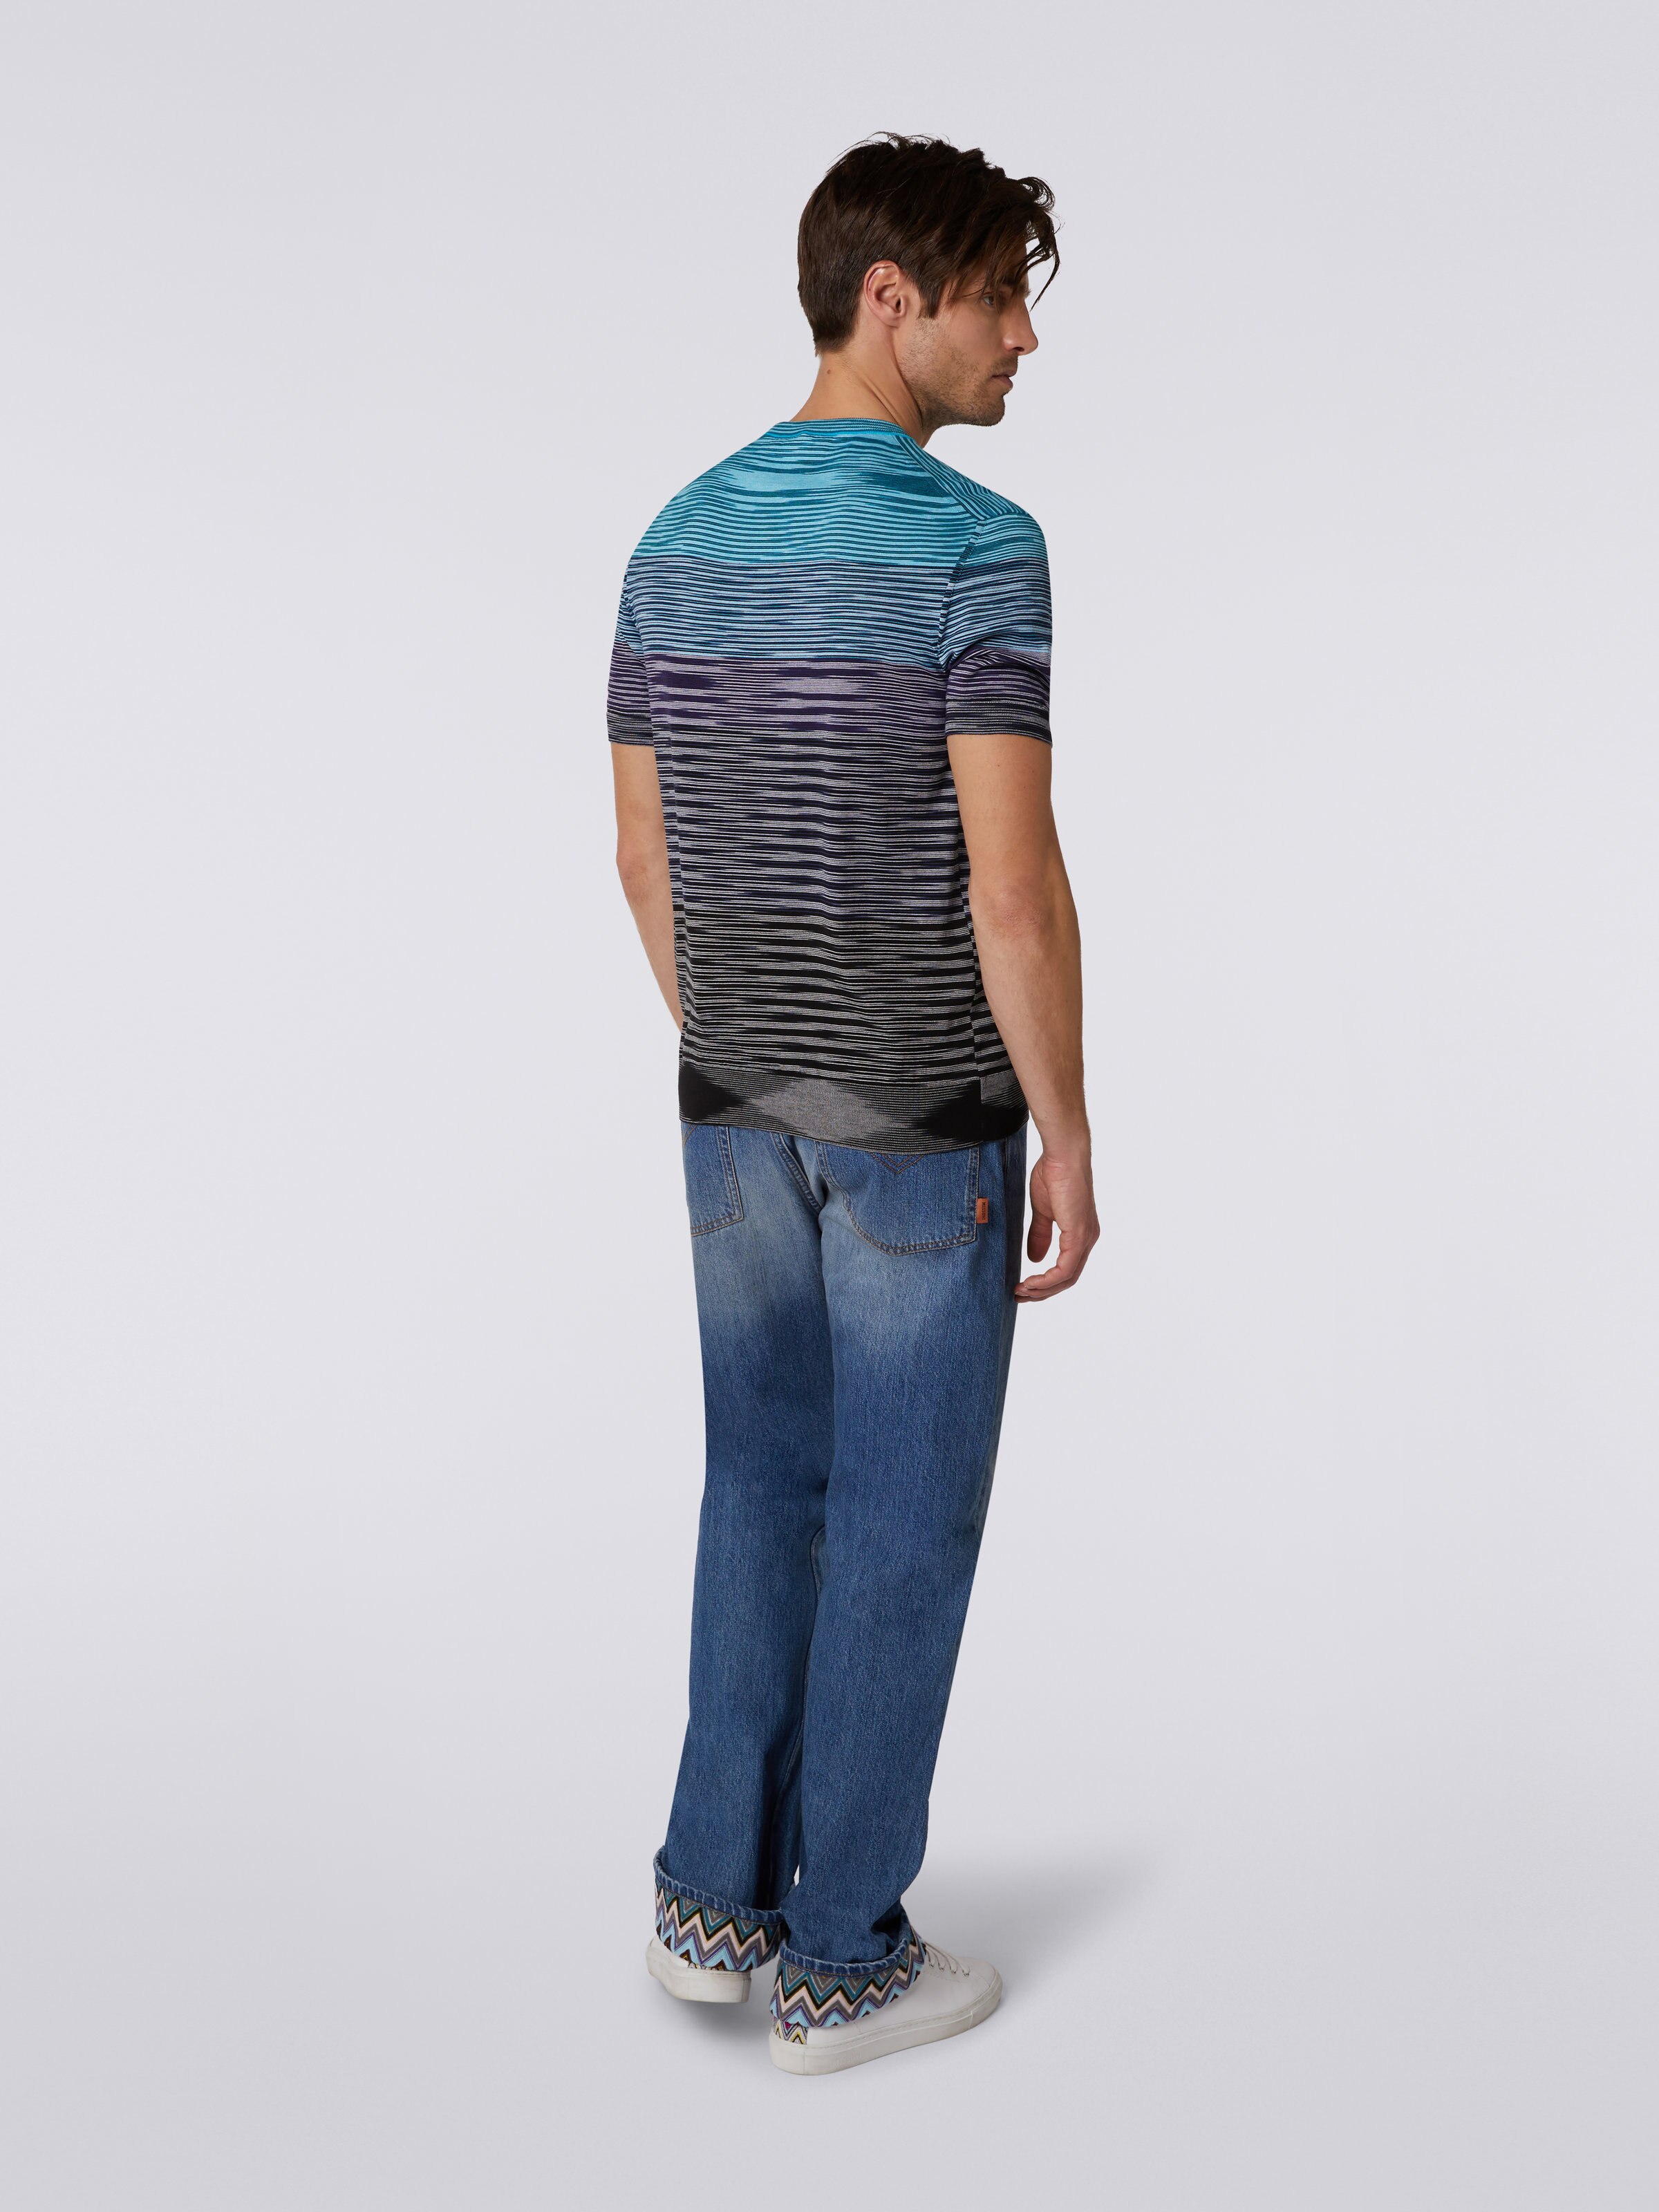 Short-sleeved crew-neck T-shirt in cotton knit with dégradé stripes, Blue, Purple & Black - 3